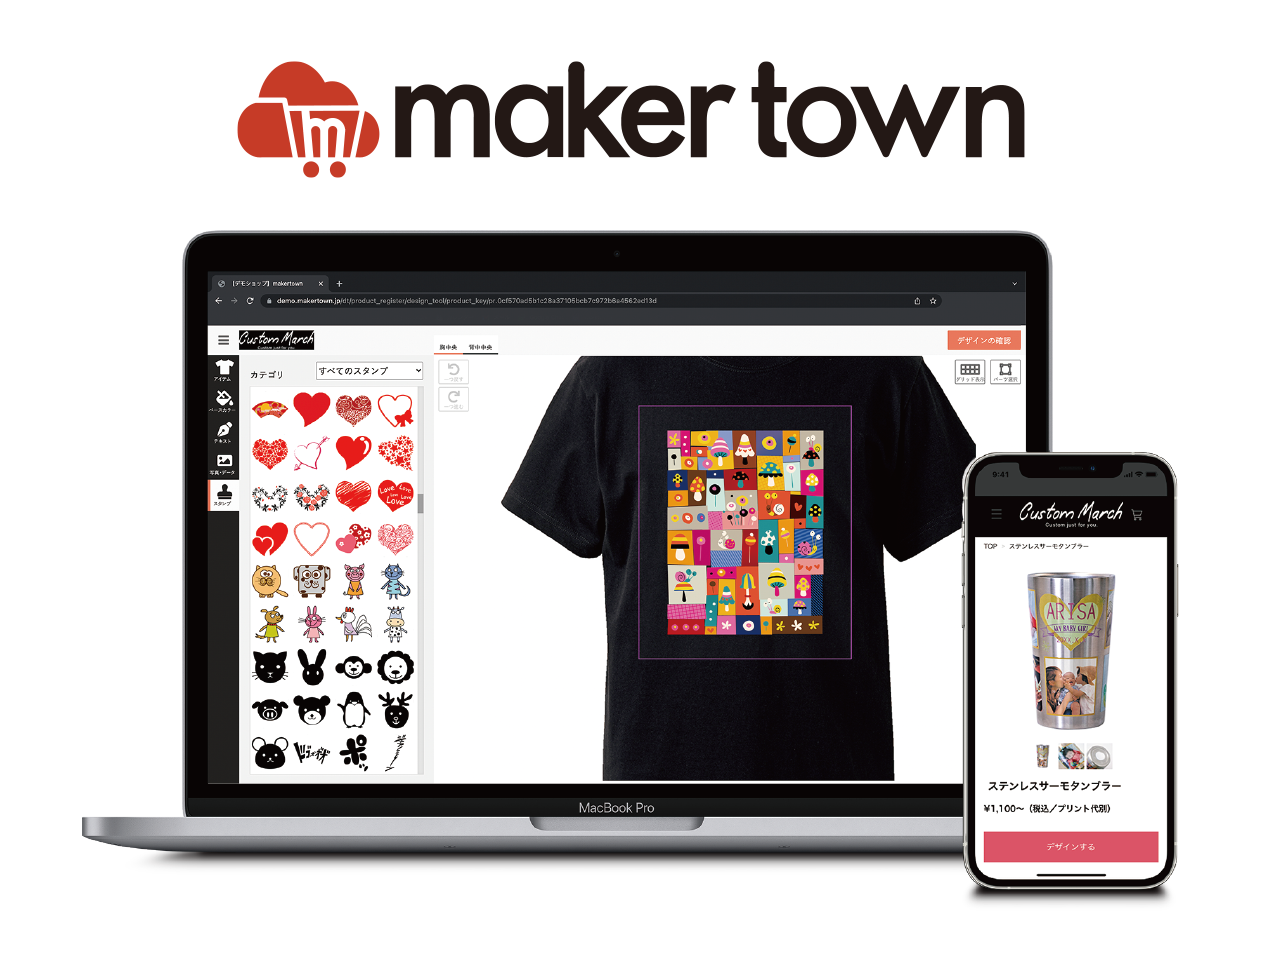 【maker town】
業界初 デザインシミュレーター付カスタマイズグッズ用ECサイト
エンジニア不要で、早期導入・立ち上げが可能